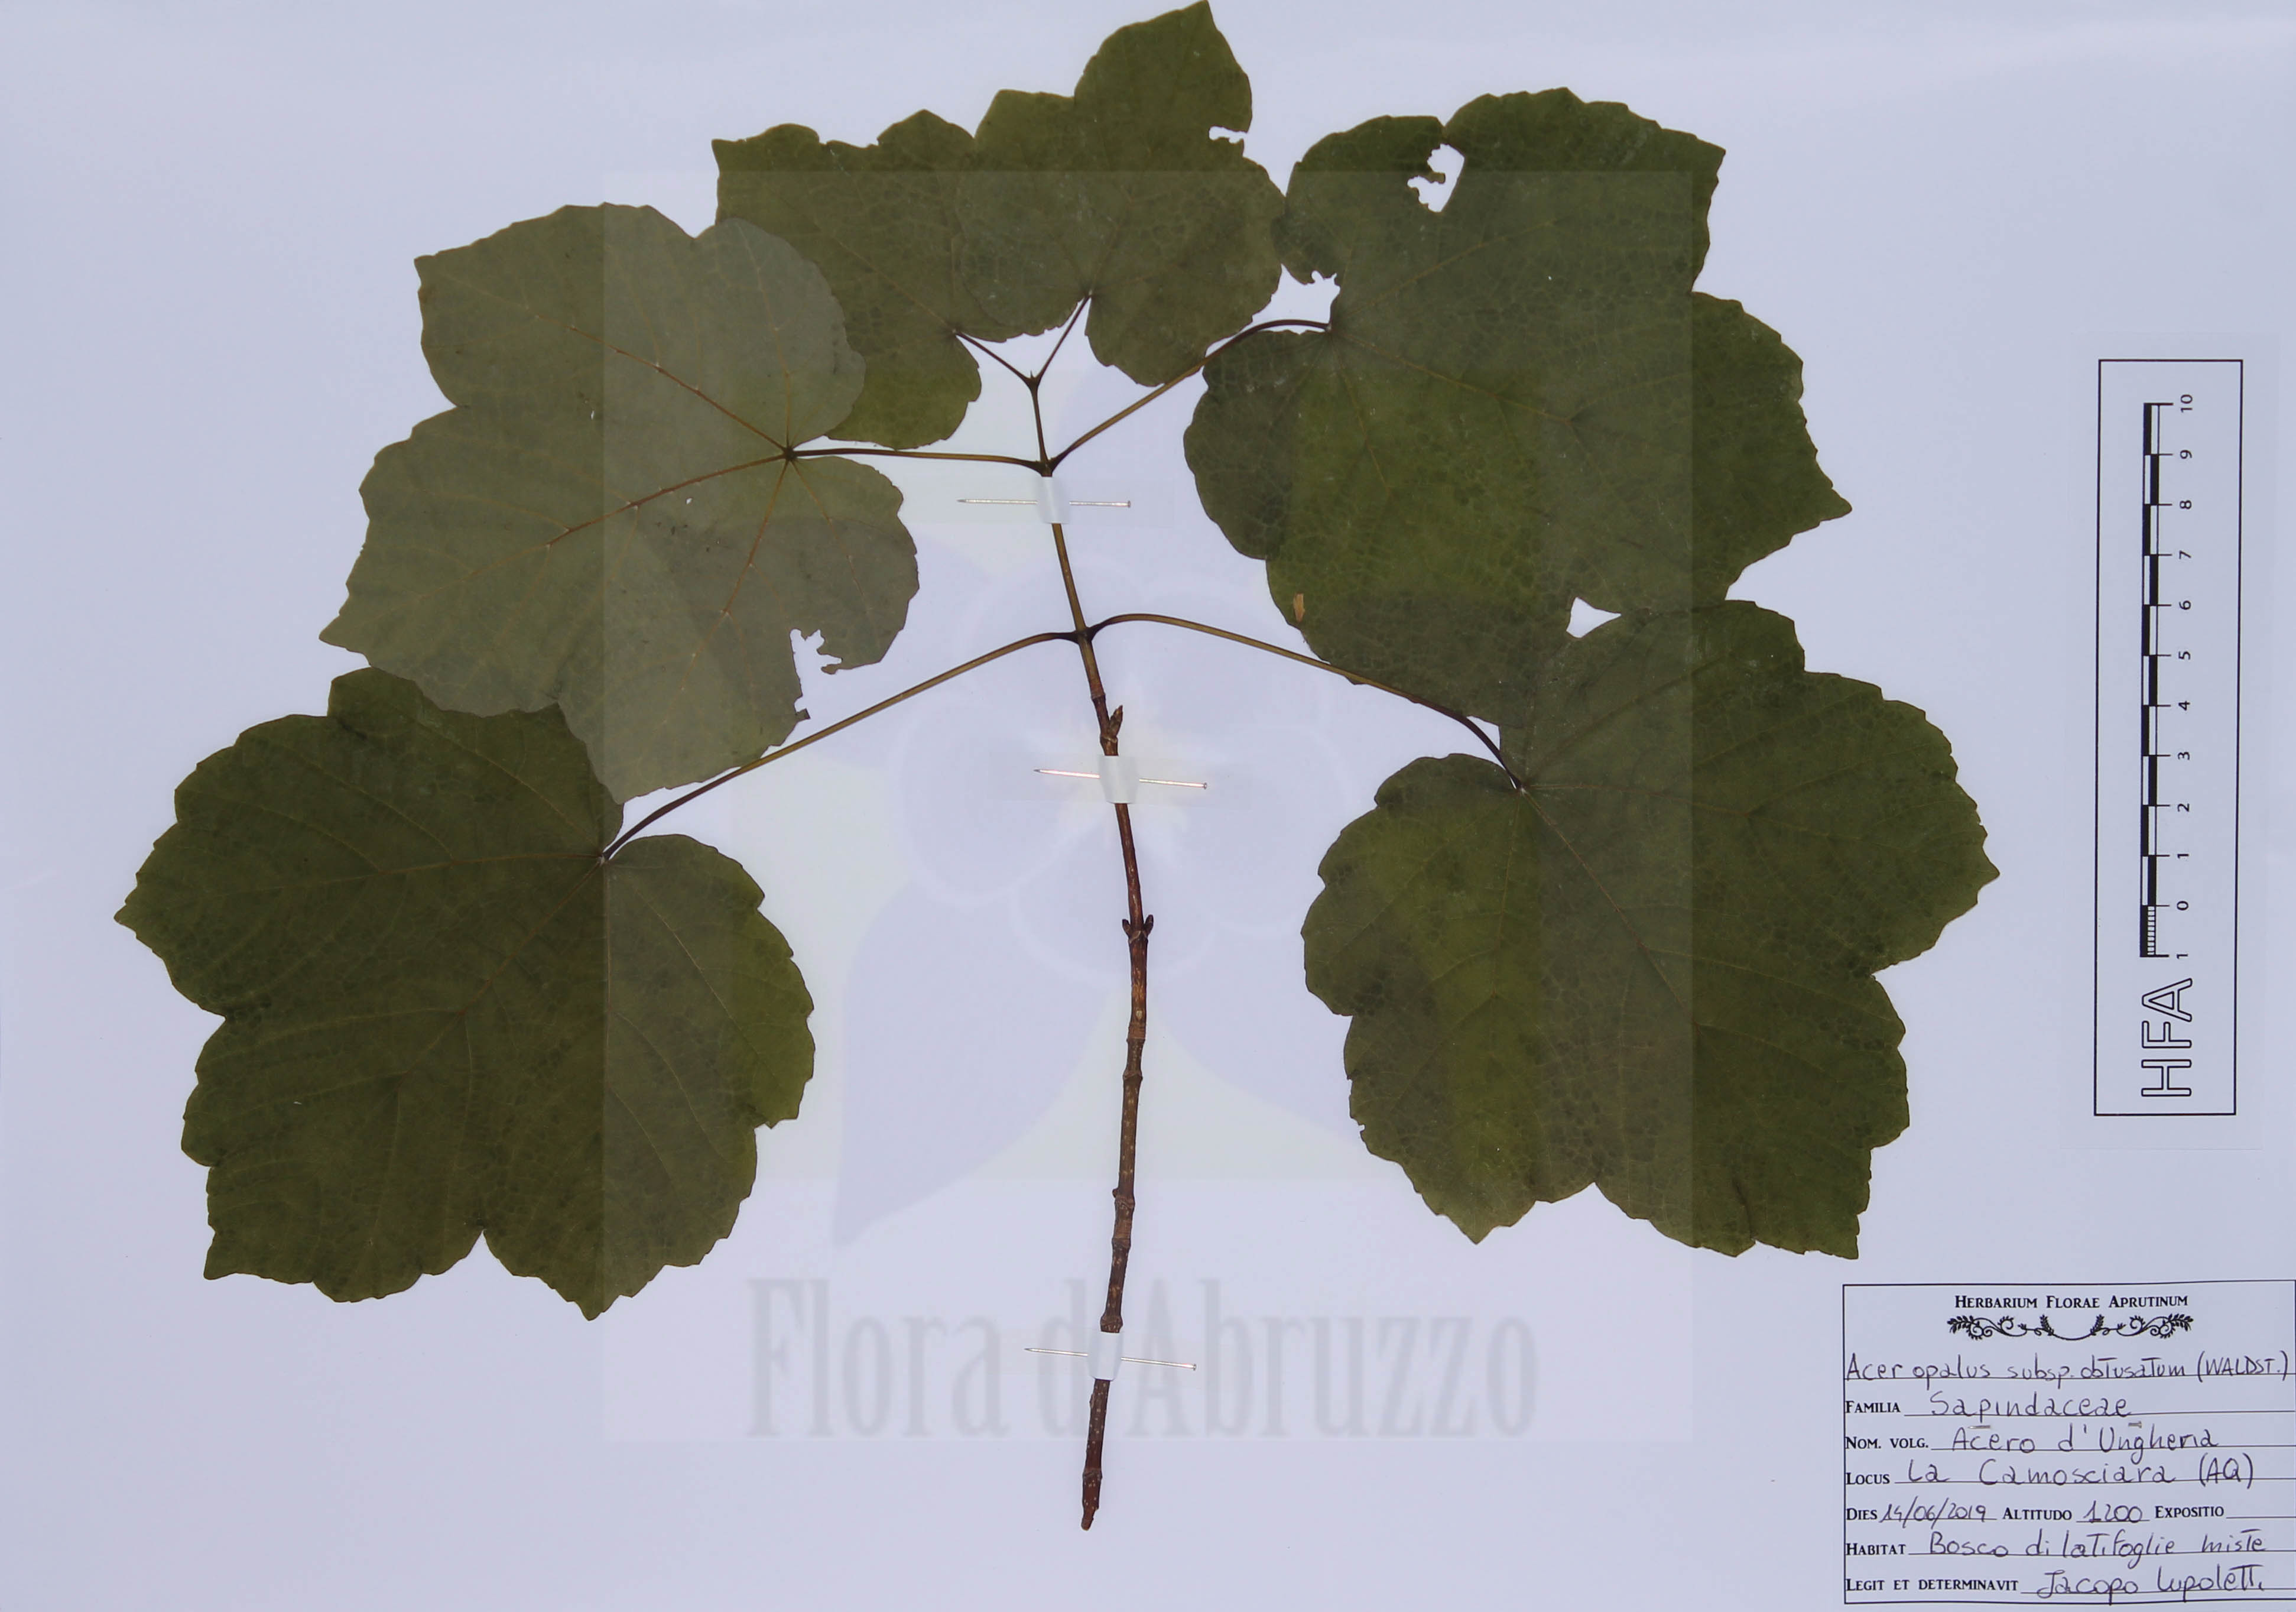 Acer opalus subsp. obtusatum (Waldst. & Kit. ex Willd.) Gams